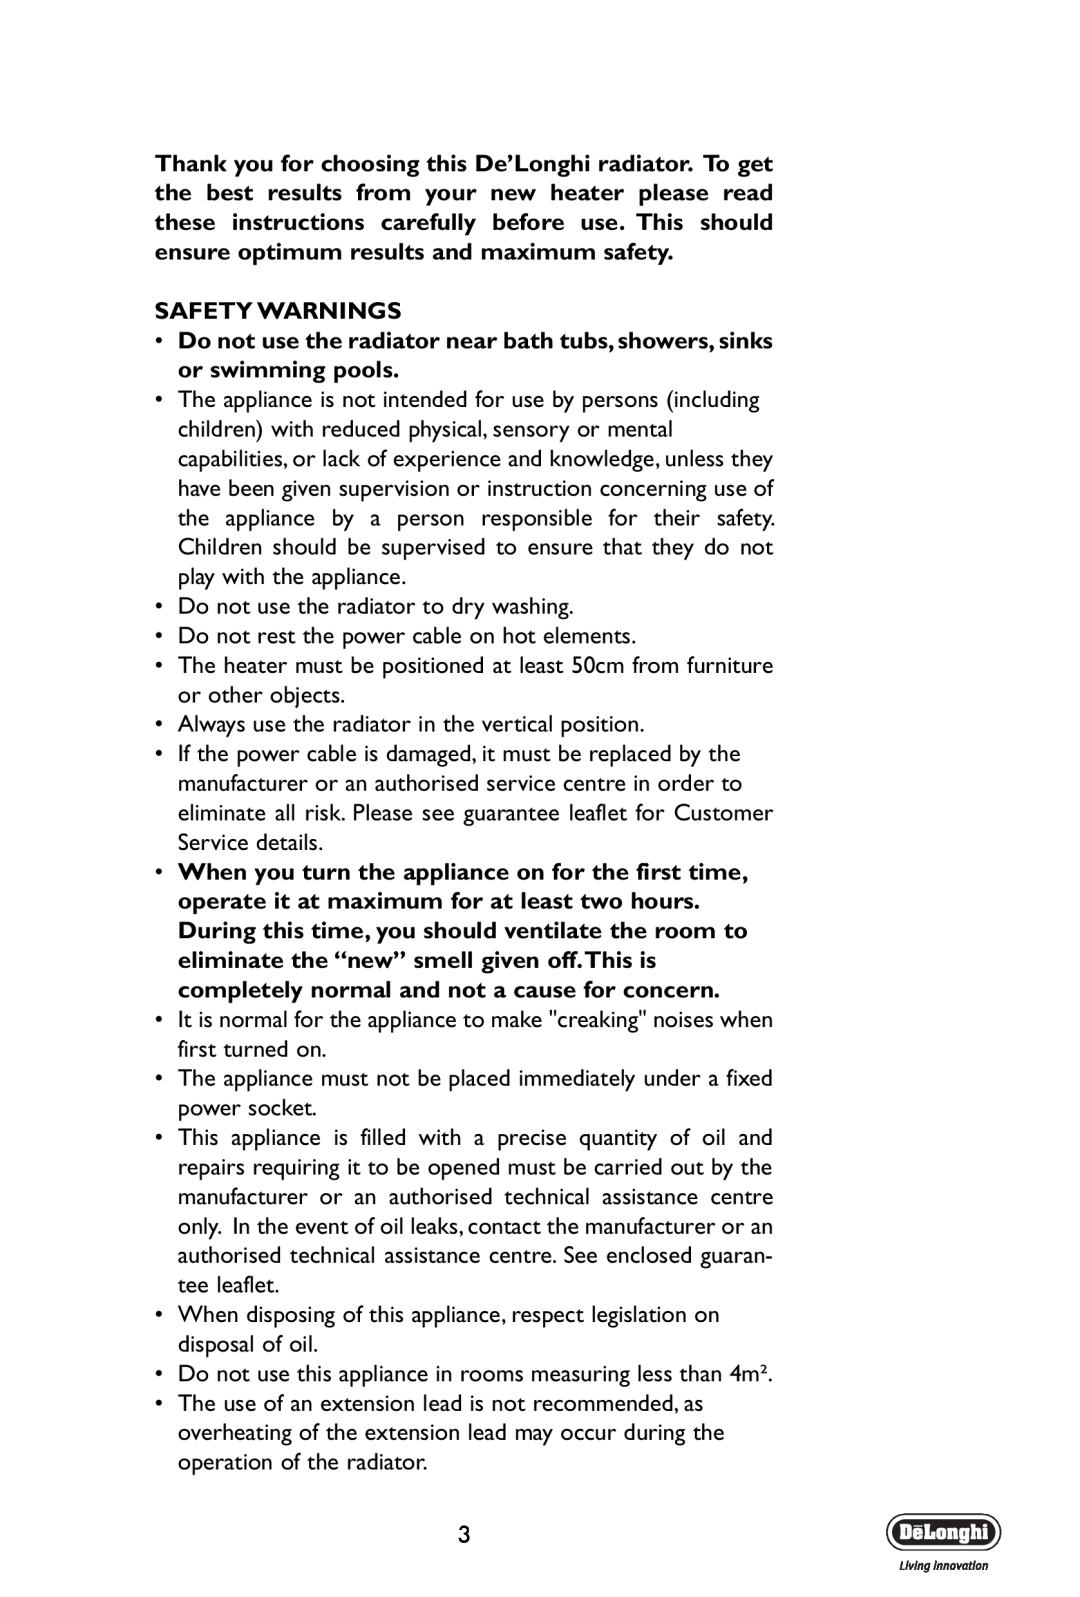 DeLonghi V551225, V550920, V550715 manual Safety Warnings 